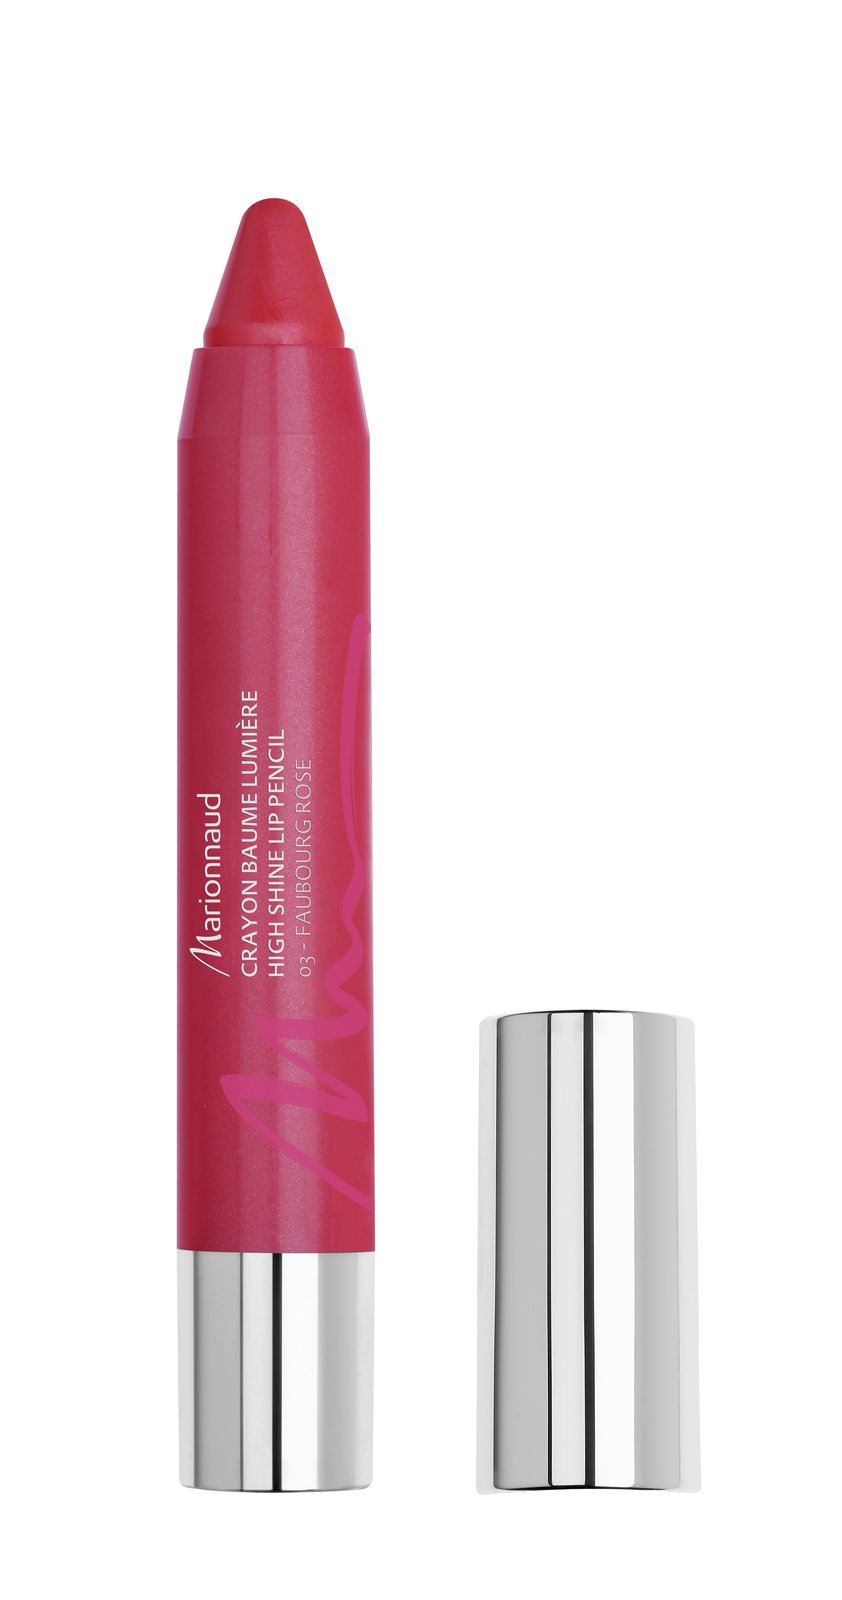 Marionnaud rtěnka High Shine Lip Pencil, 369 Kč, koupíte exkluzivně v parfumeriích Marrionaud